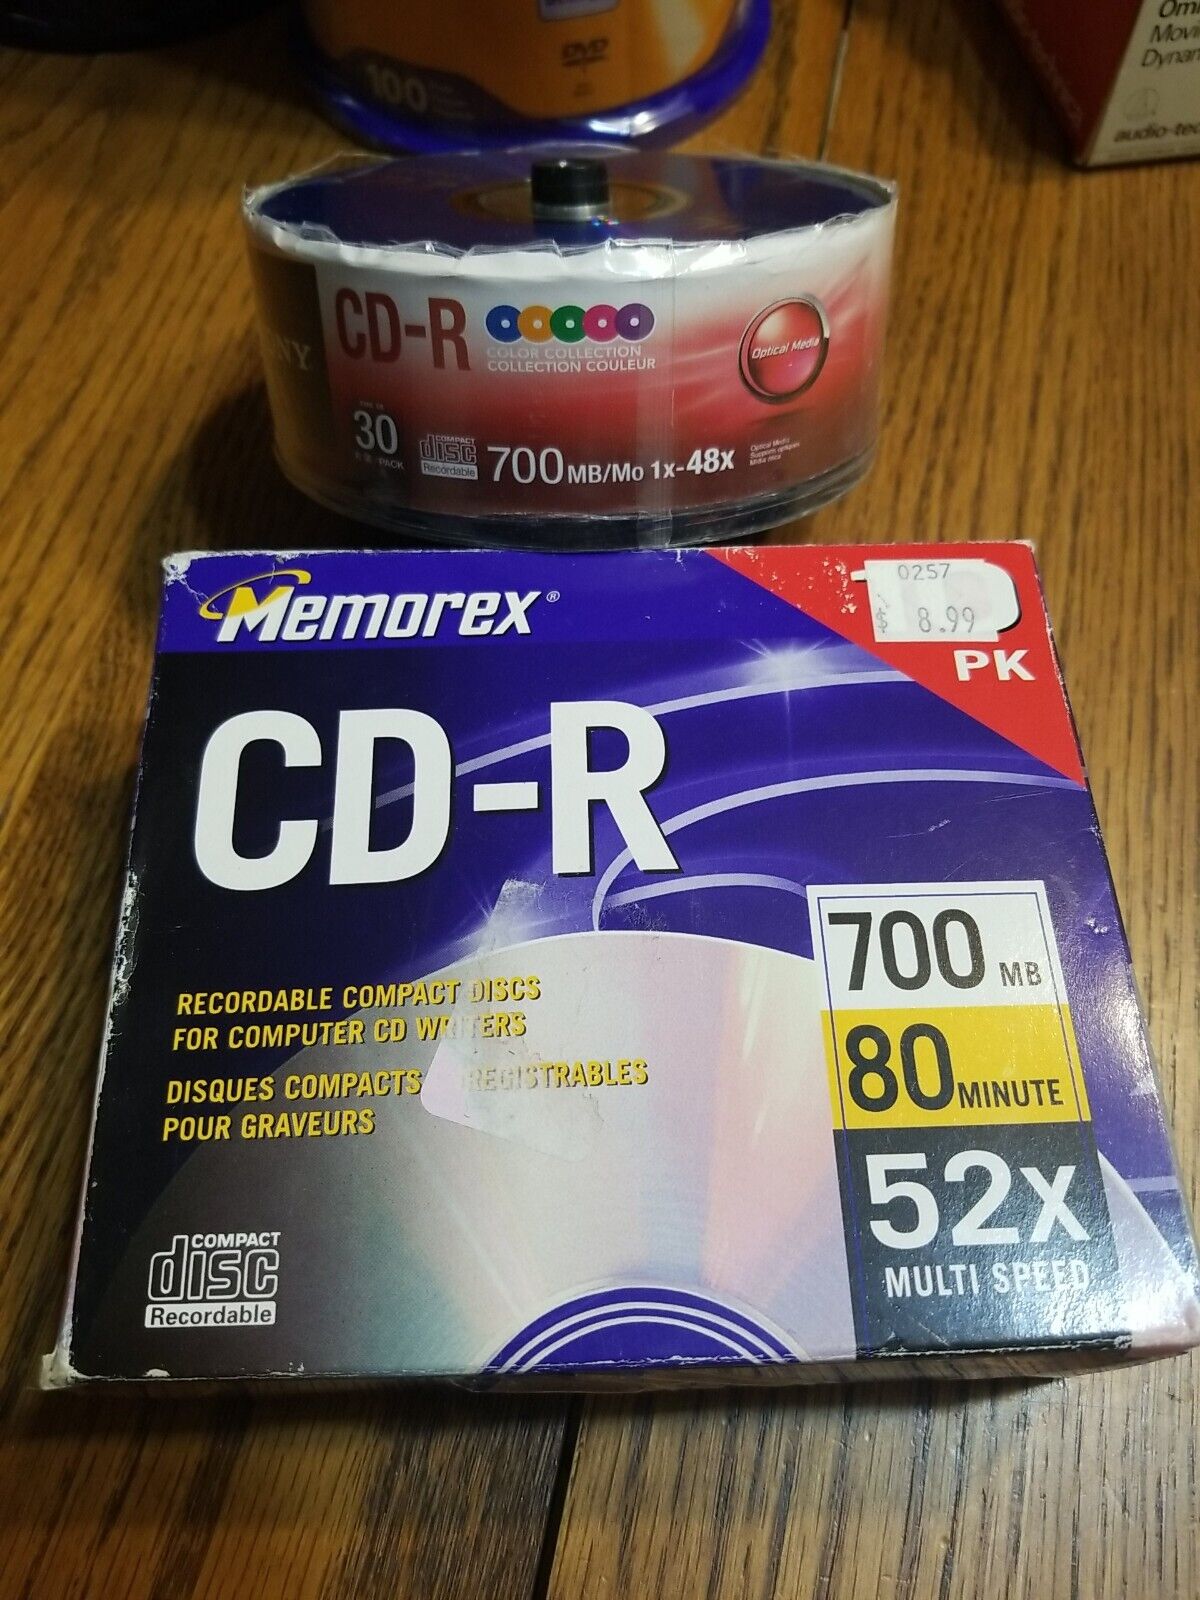 30 SONY Blank 48X CD-R Optical Media Recordable 700MB Media Disc. PLUS 9 Memorex